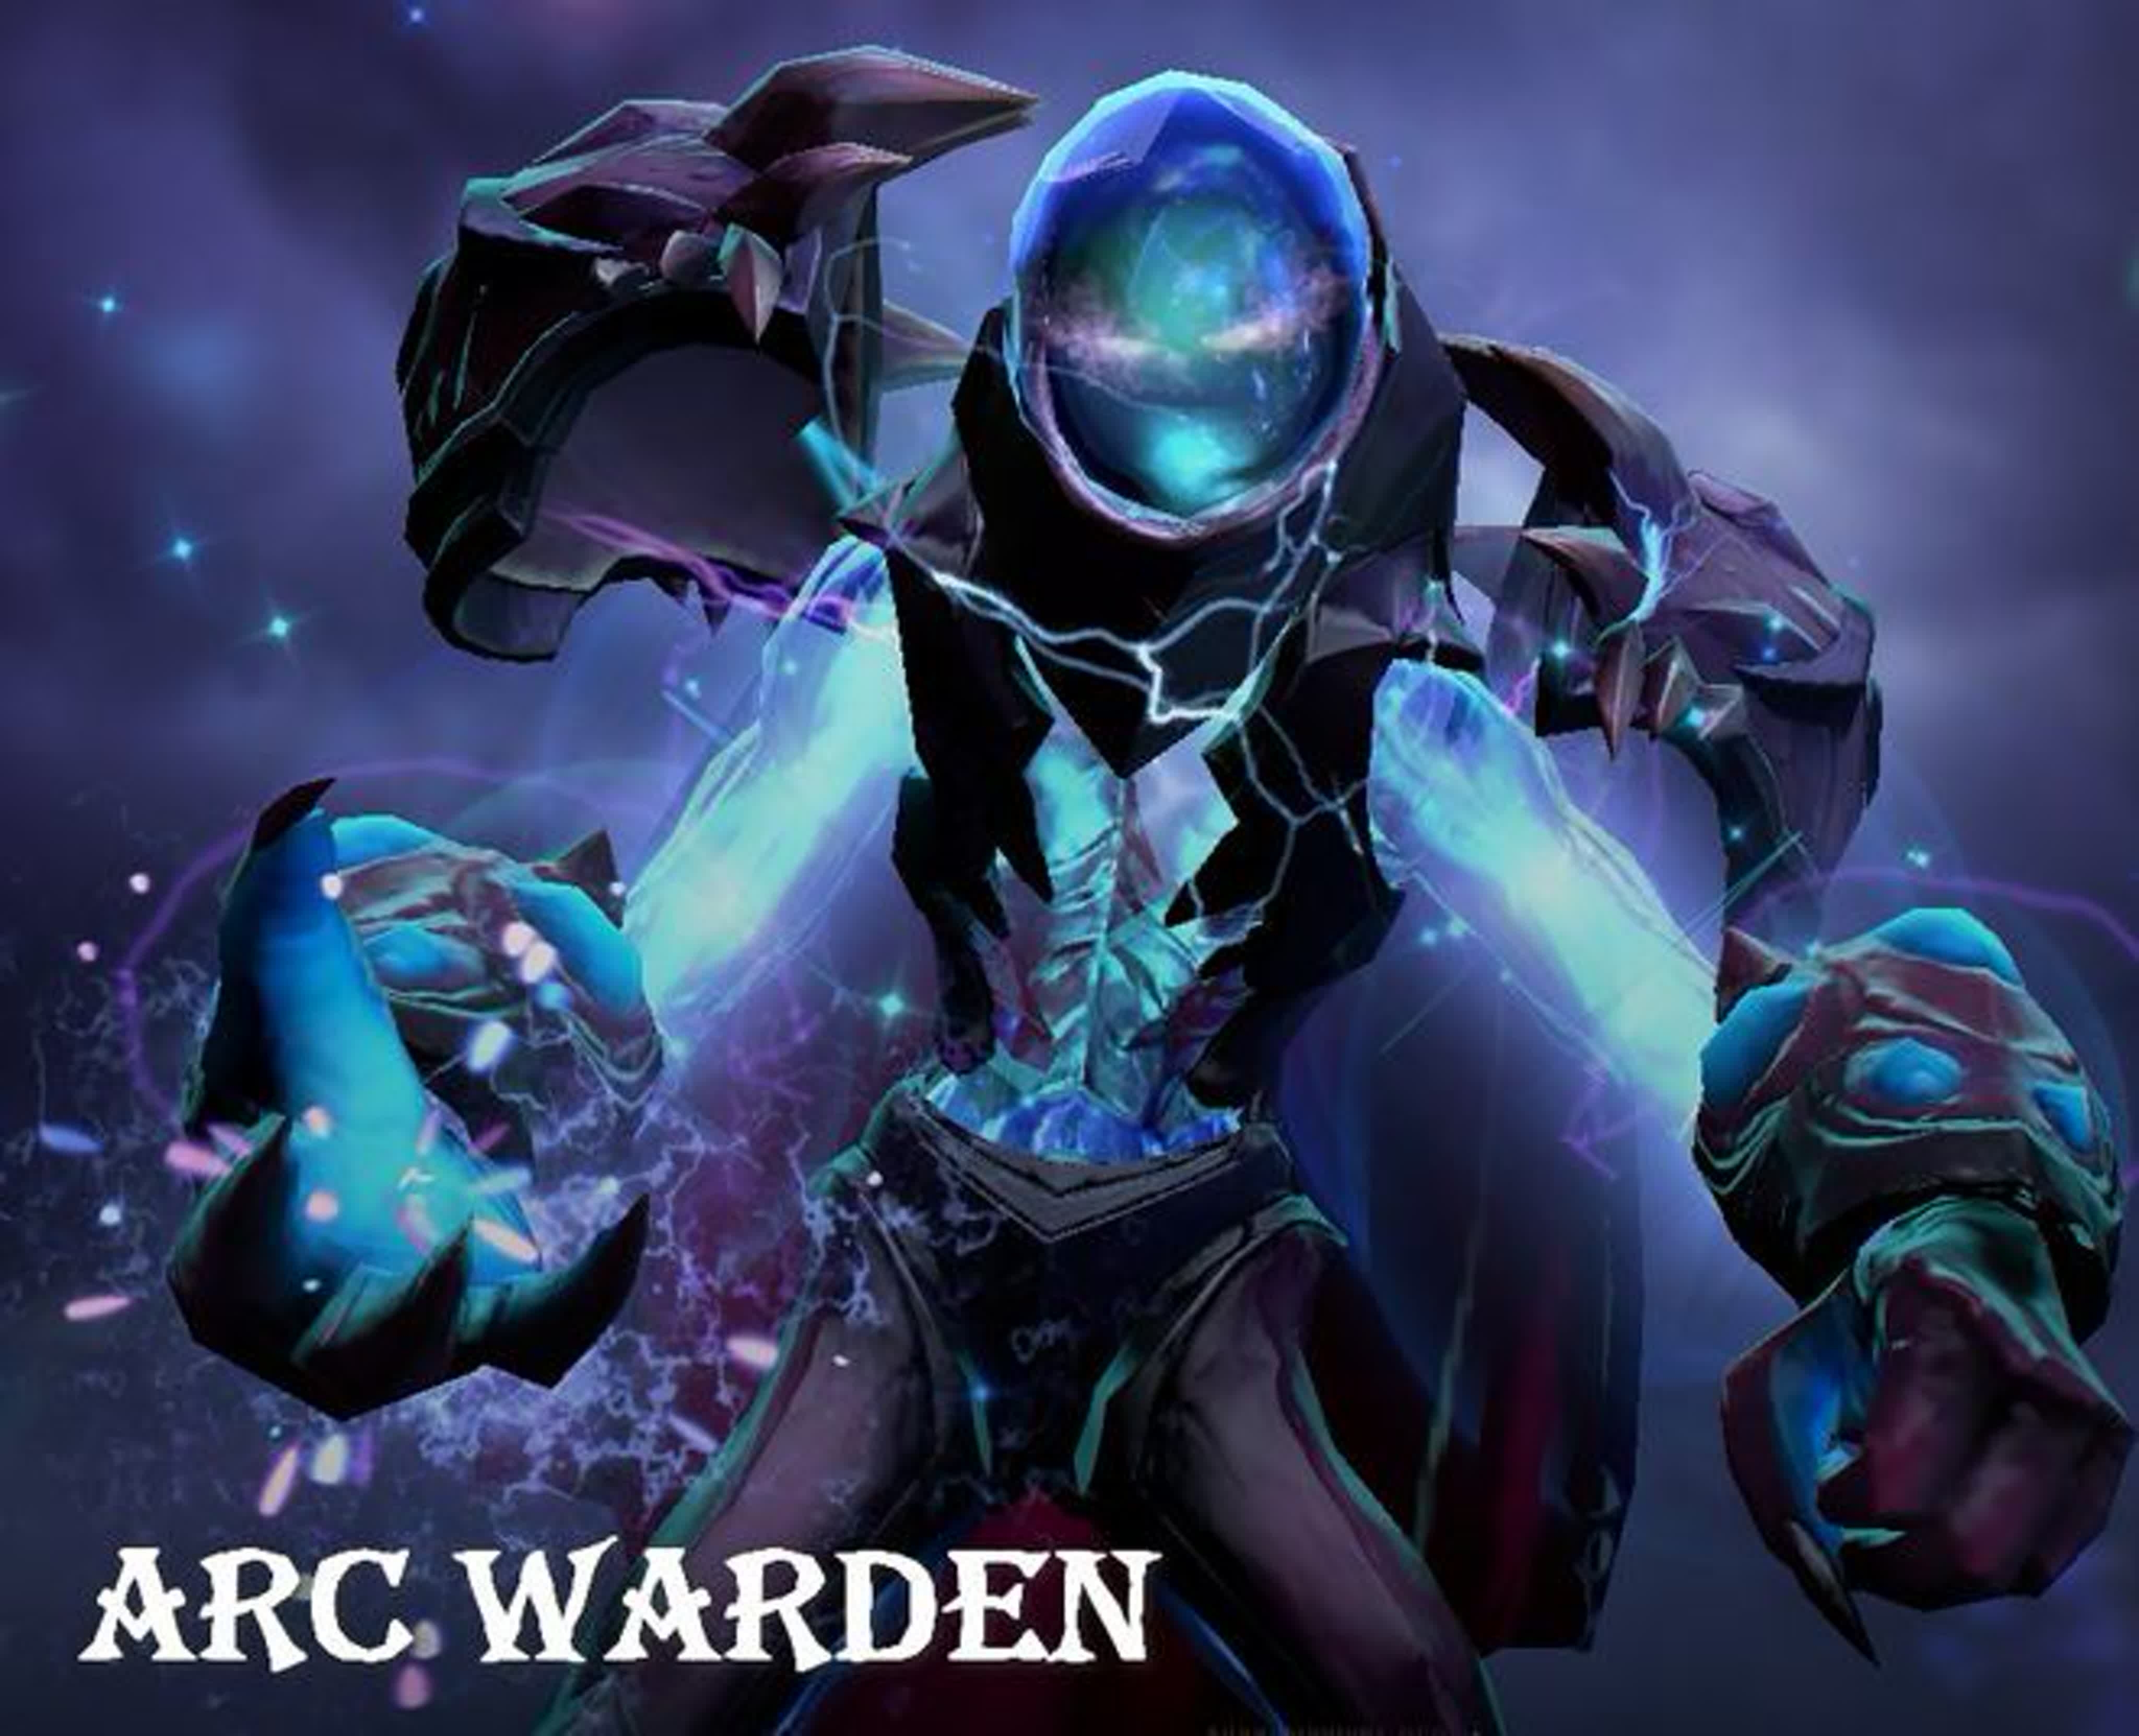 Arc warden 2